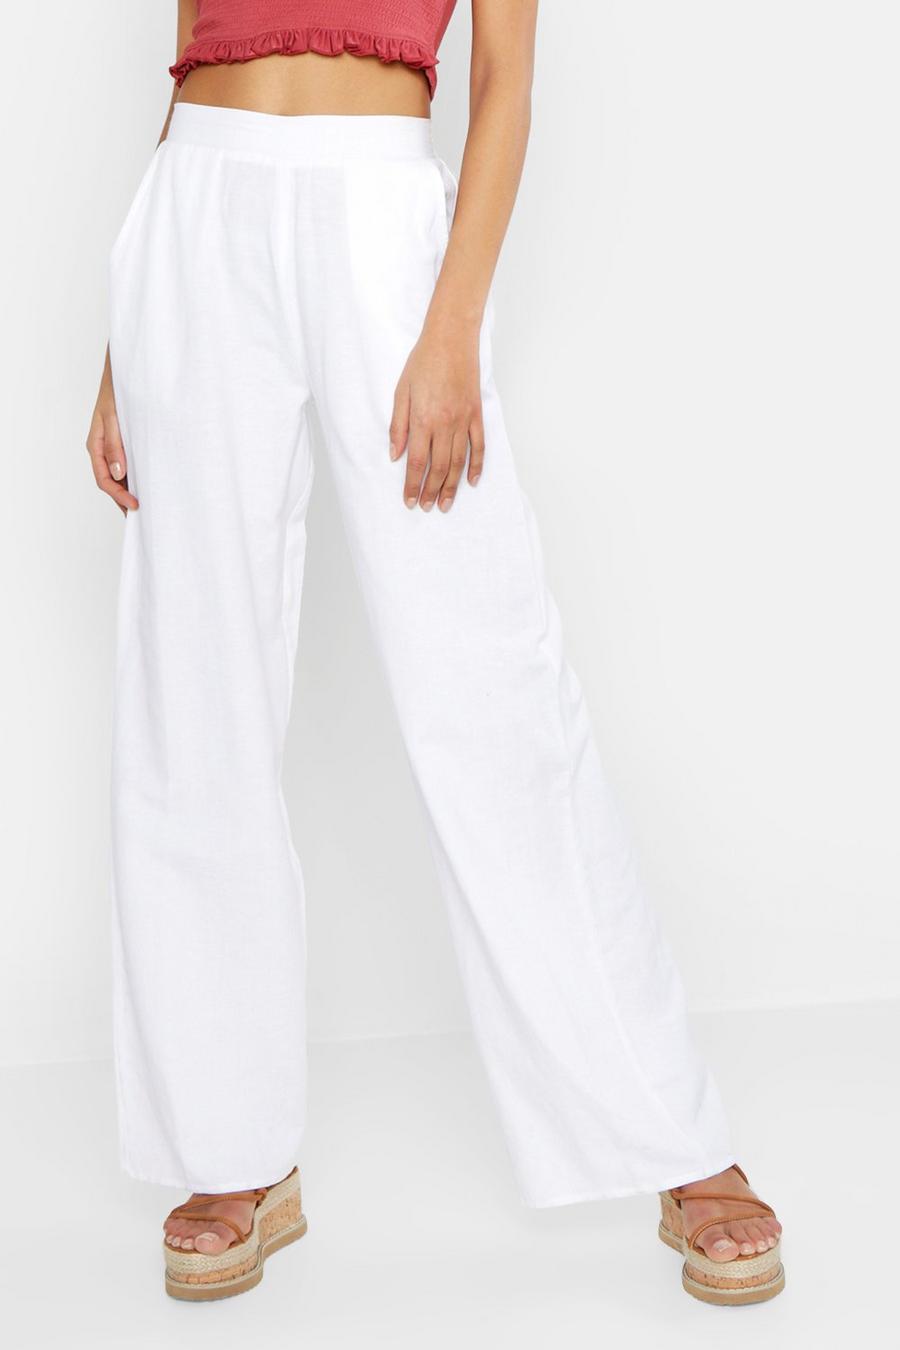 https://media.boohoo.com/i/boohoo/tzz94446_white_xl/female-white-tall-linen-pants/?w=900&qlt=default&fmt.jp2.qlt=70&fmt=auto&sm=fit